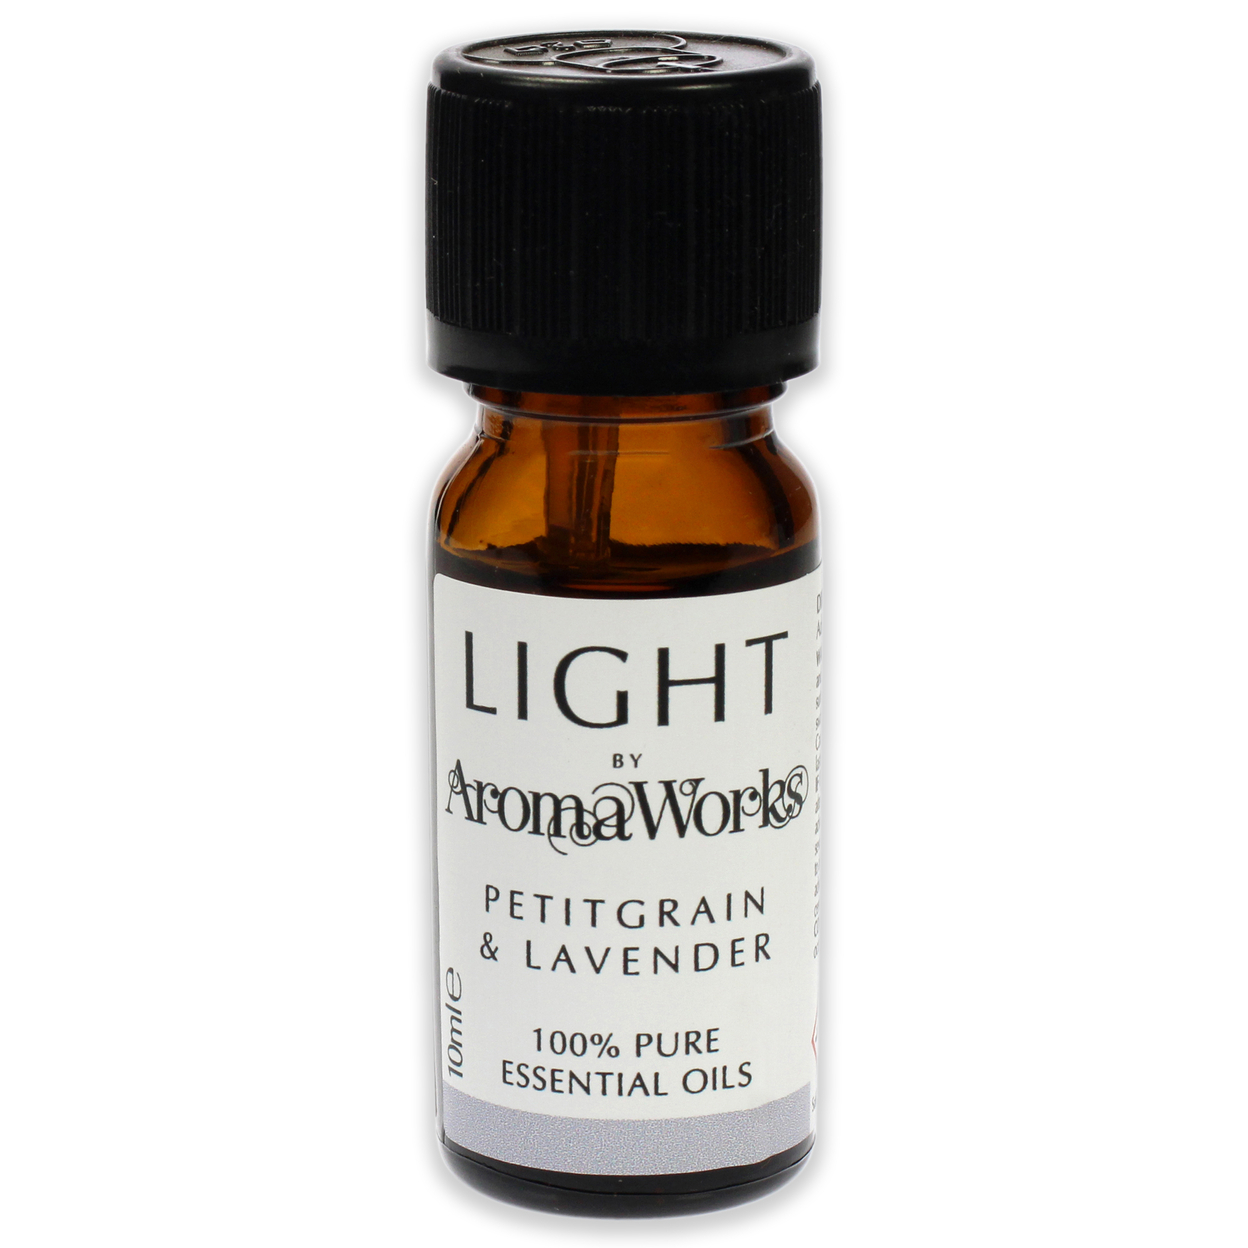 Aromaworks Light Essential Oil - Petitgrain And Lavender 0.33 Oz